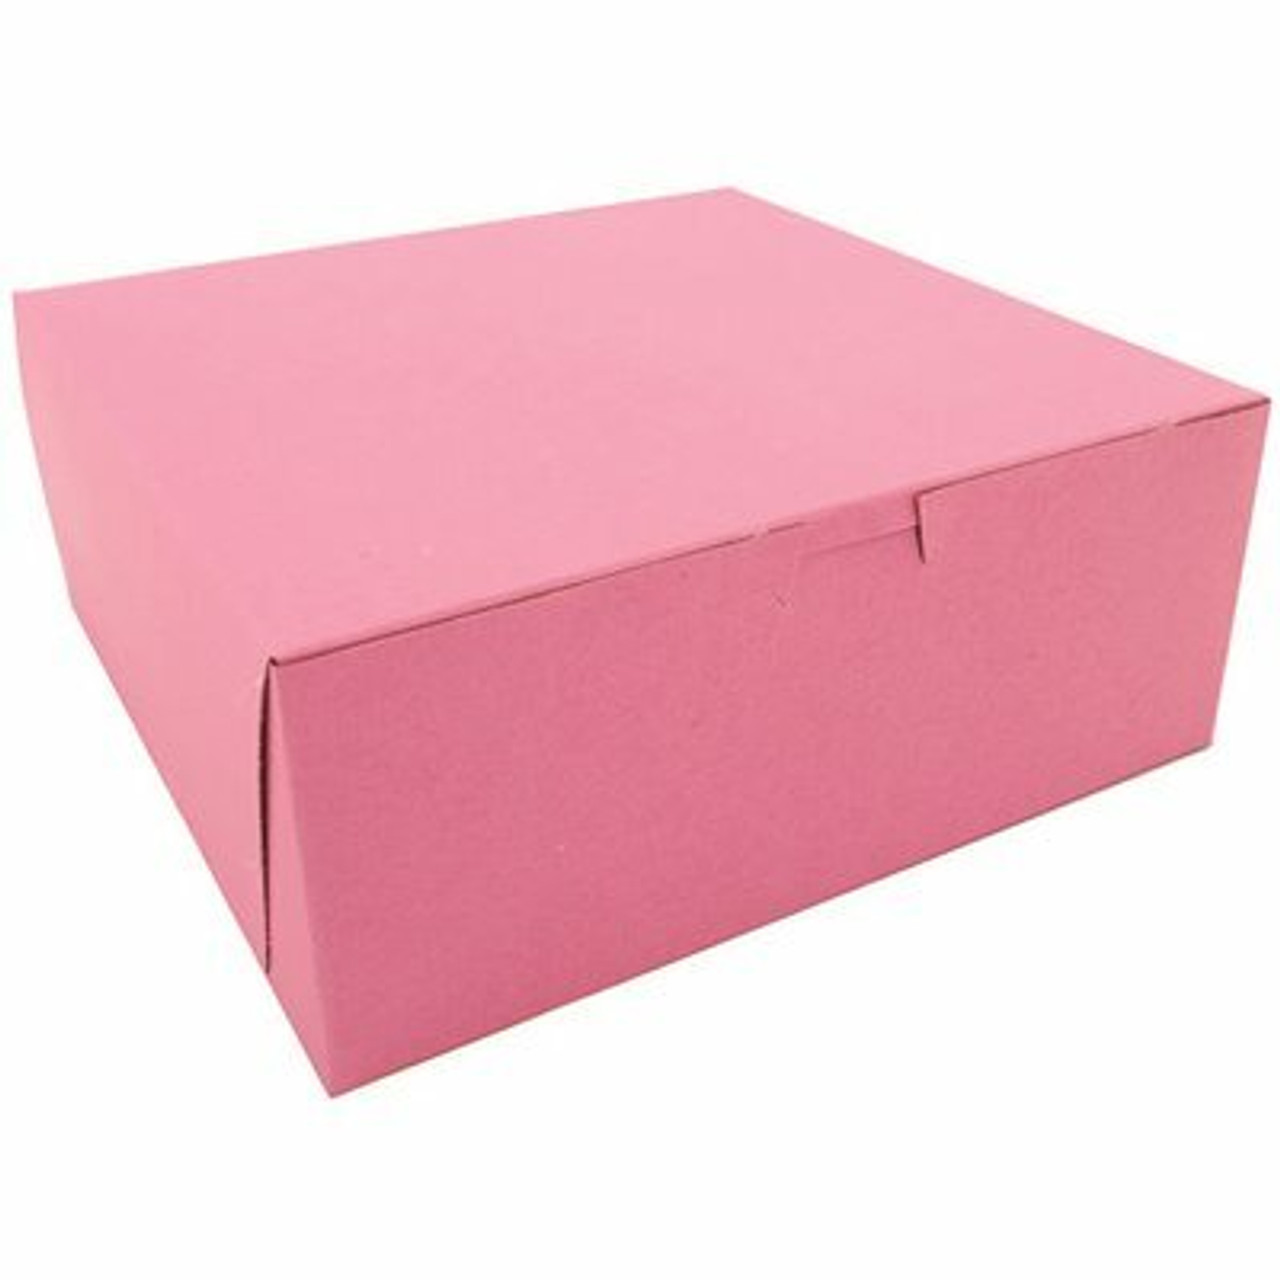 Southern Champion Tray Pink Non-Window Bakery Box 10 X 10 X 4" (100 Per Case)